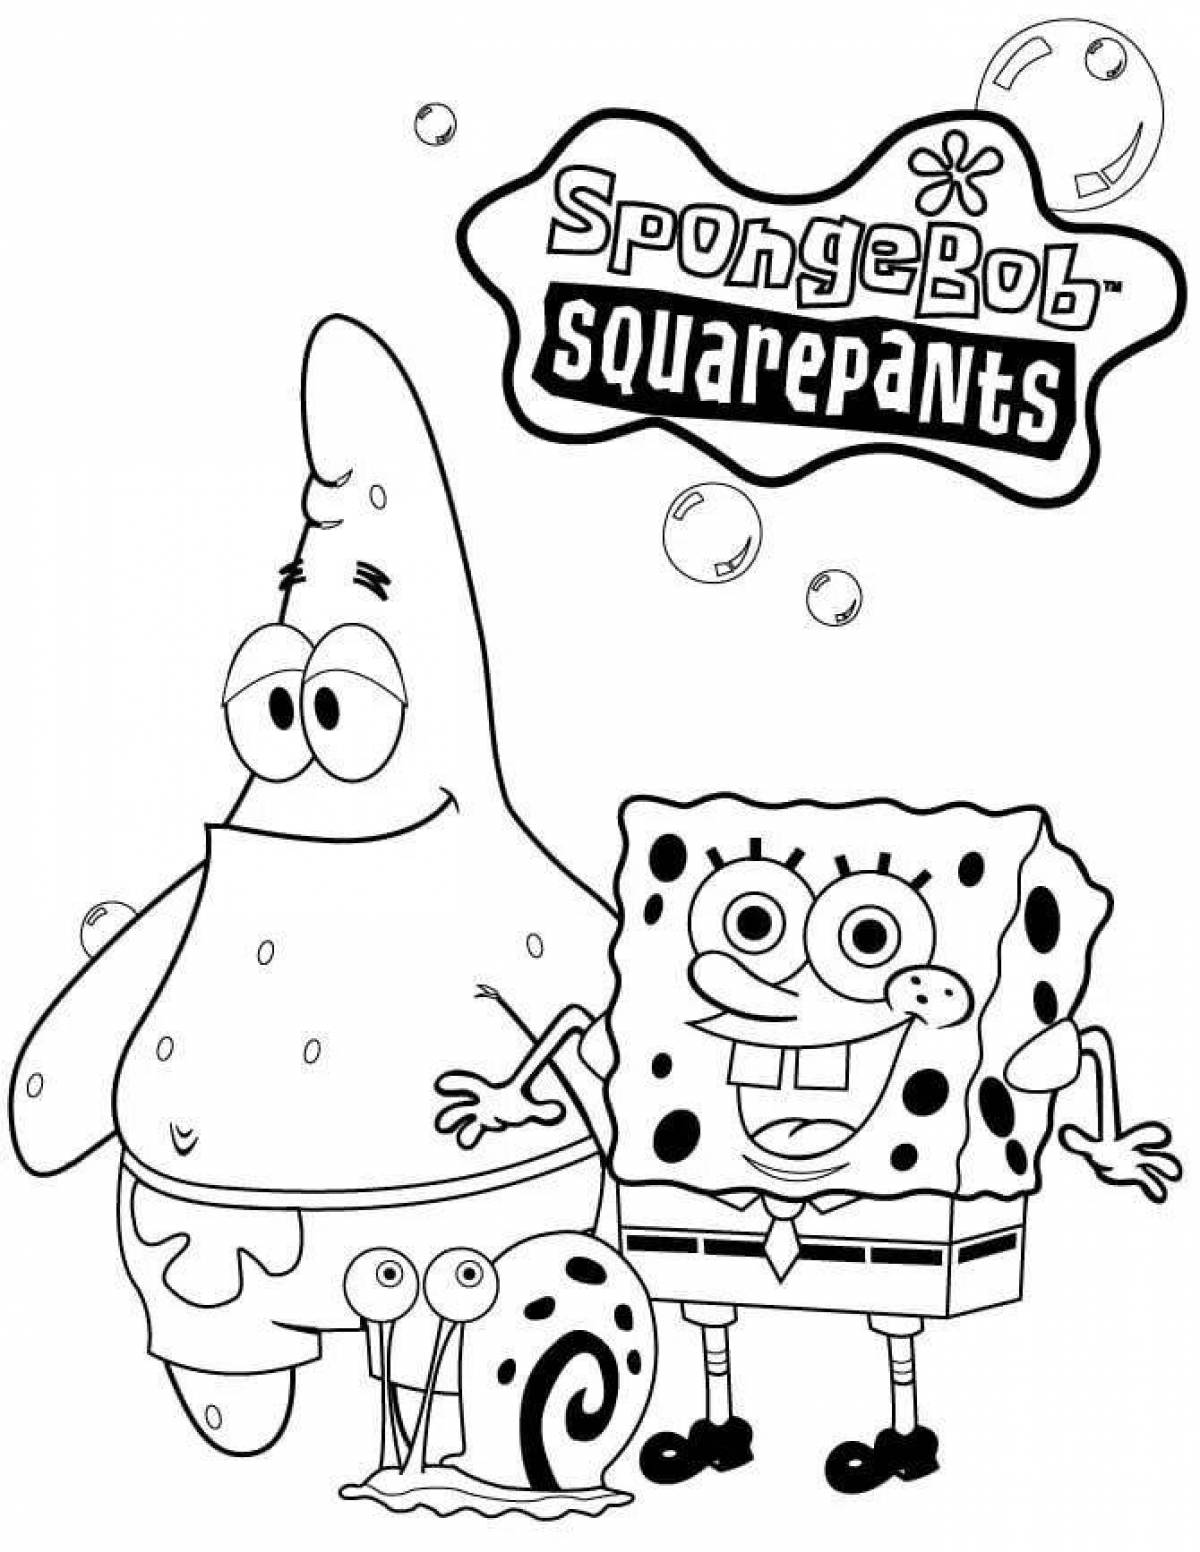 Spongebob and friends #11